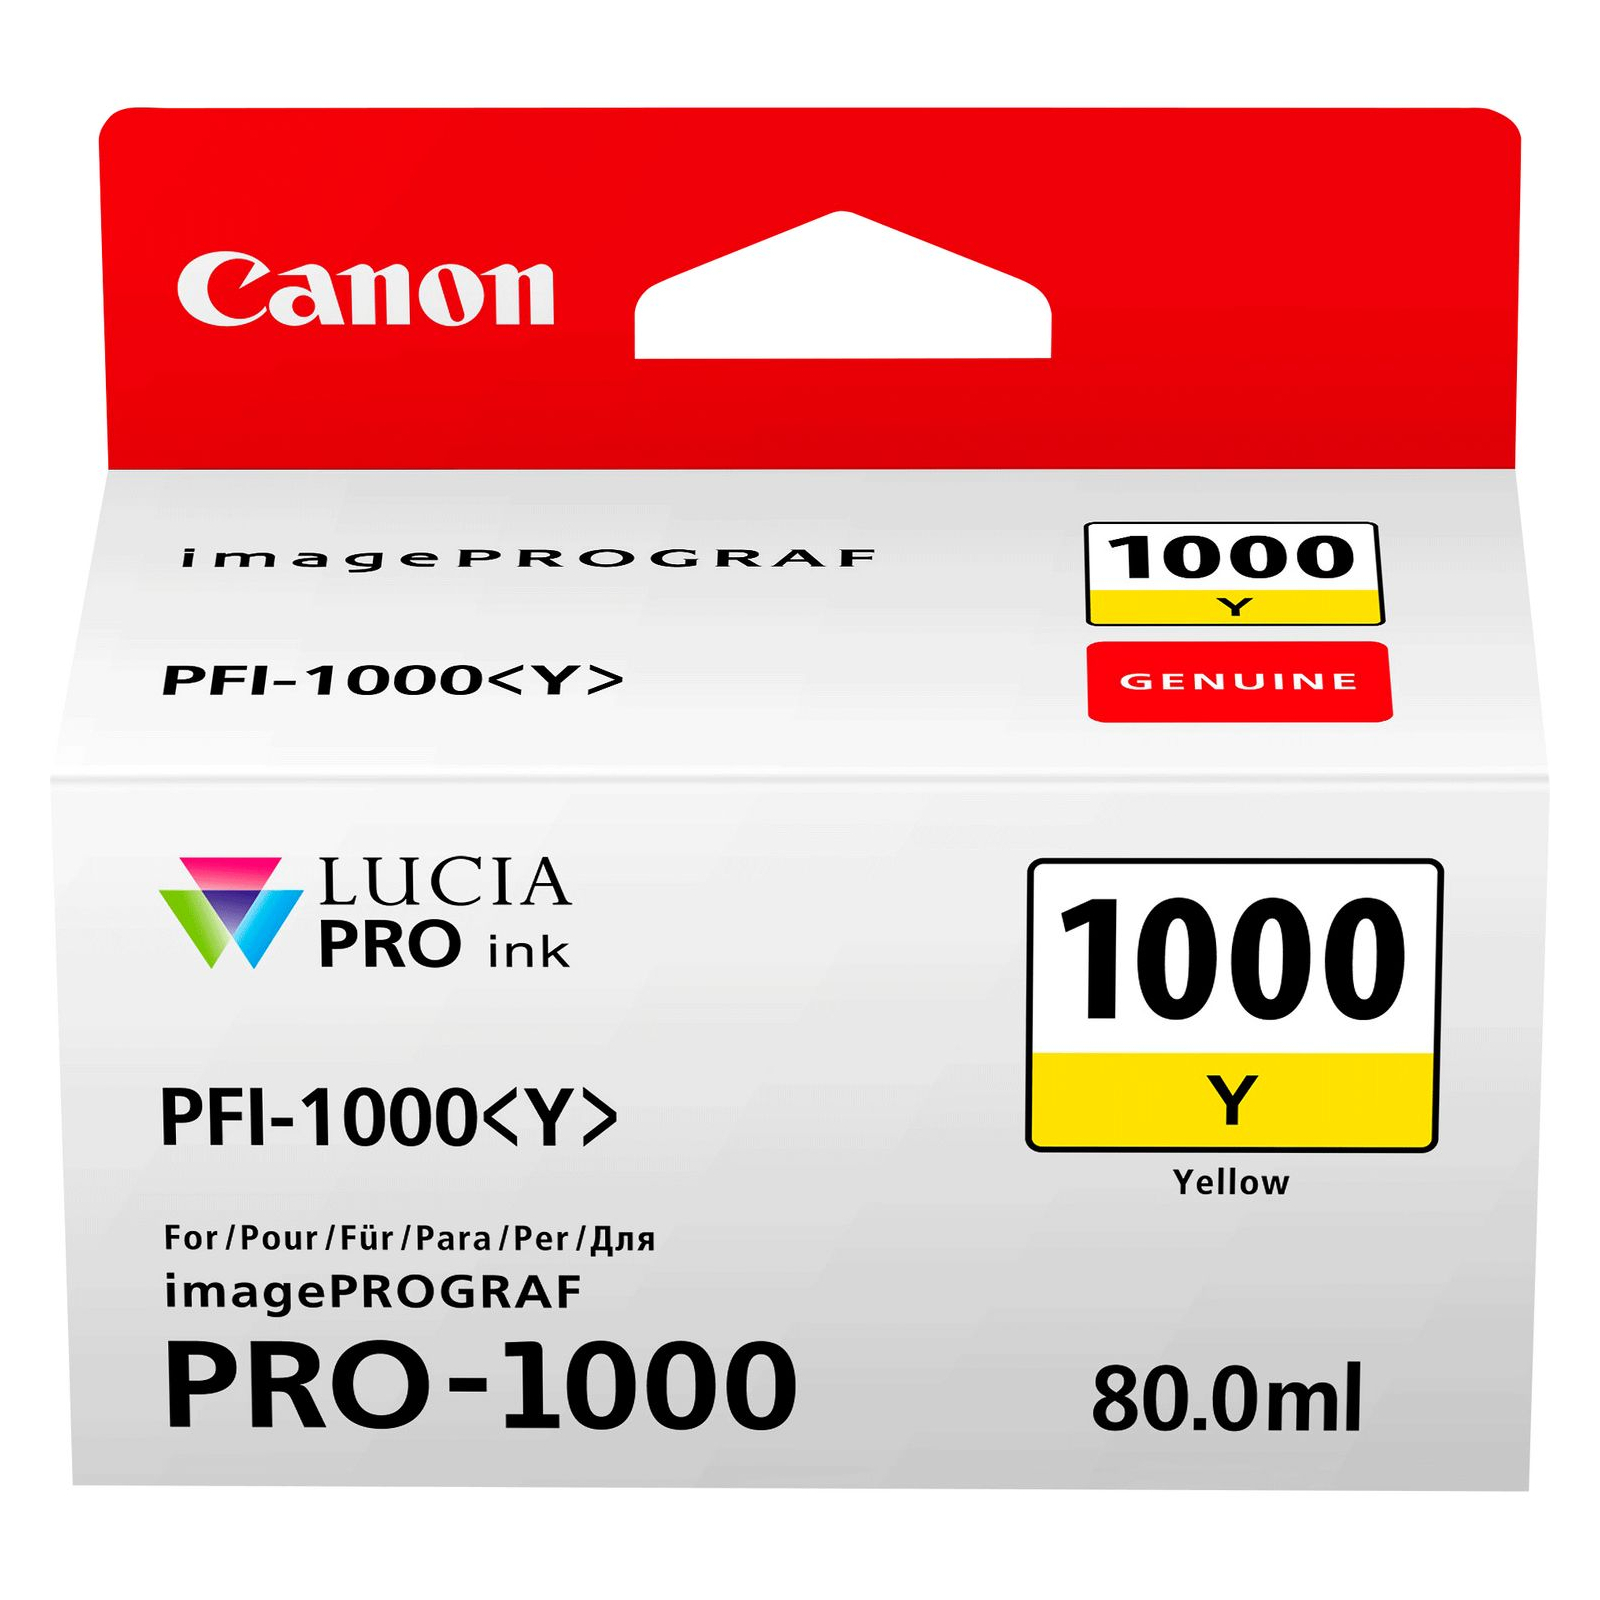 Картридж Canon PFI-1000PC (Photo Cyan) (0550C001)